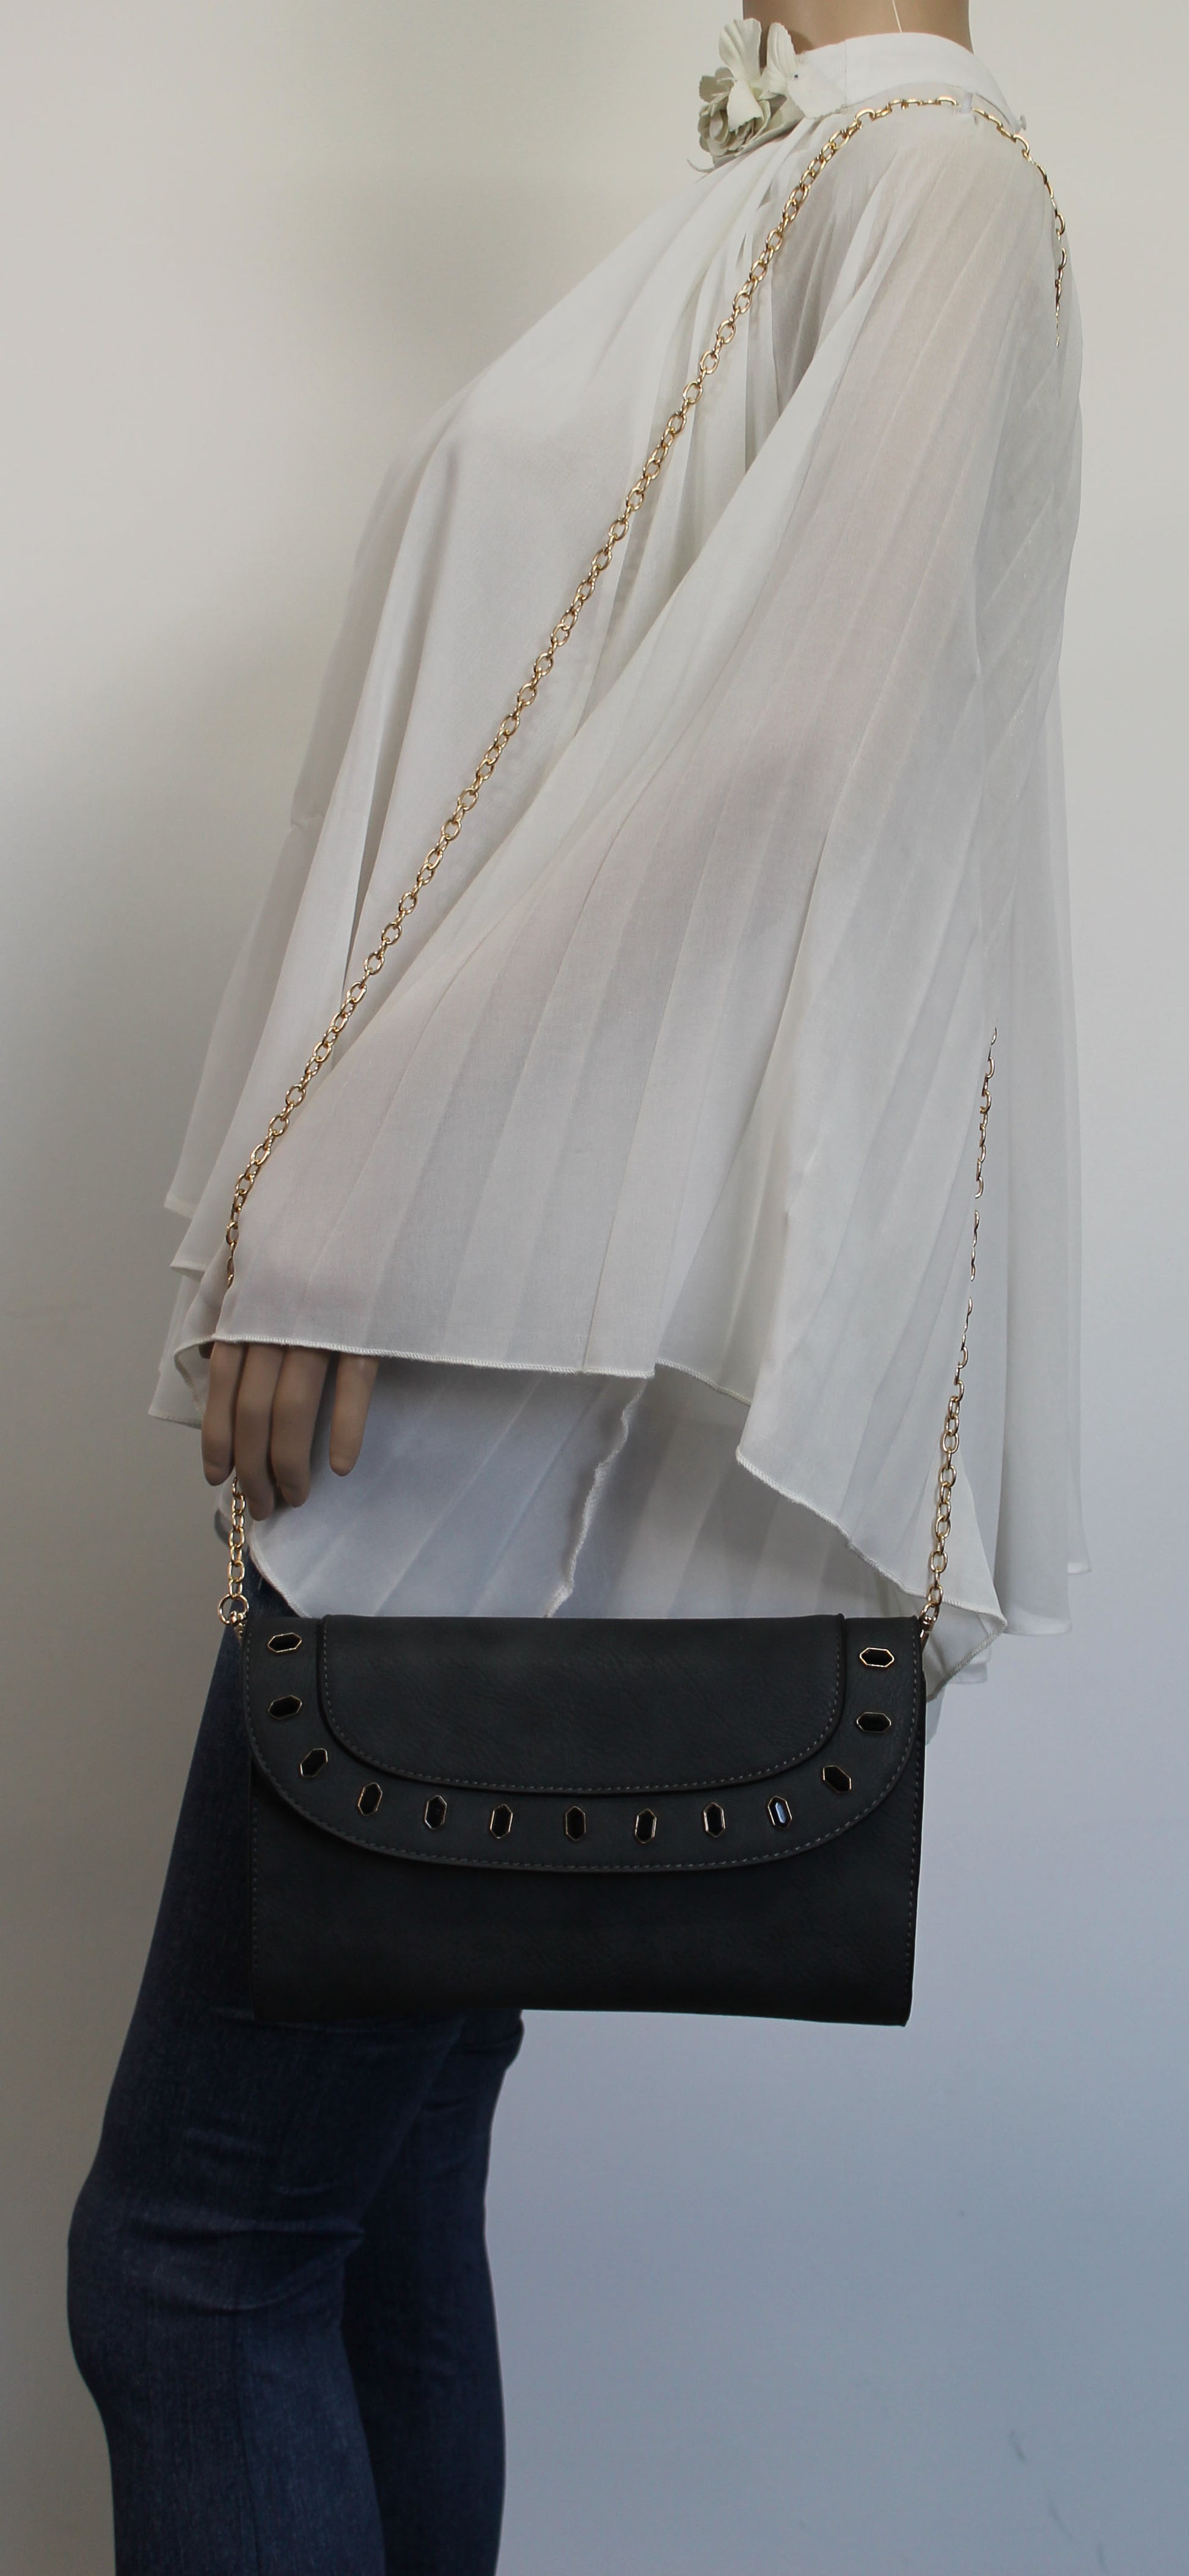 SWANKYSWANS Tiare Onyx Style Clutch Bag Grey Cute Cheap Clutch Bag For Weddings School and Work